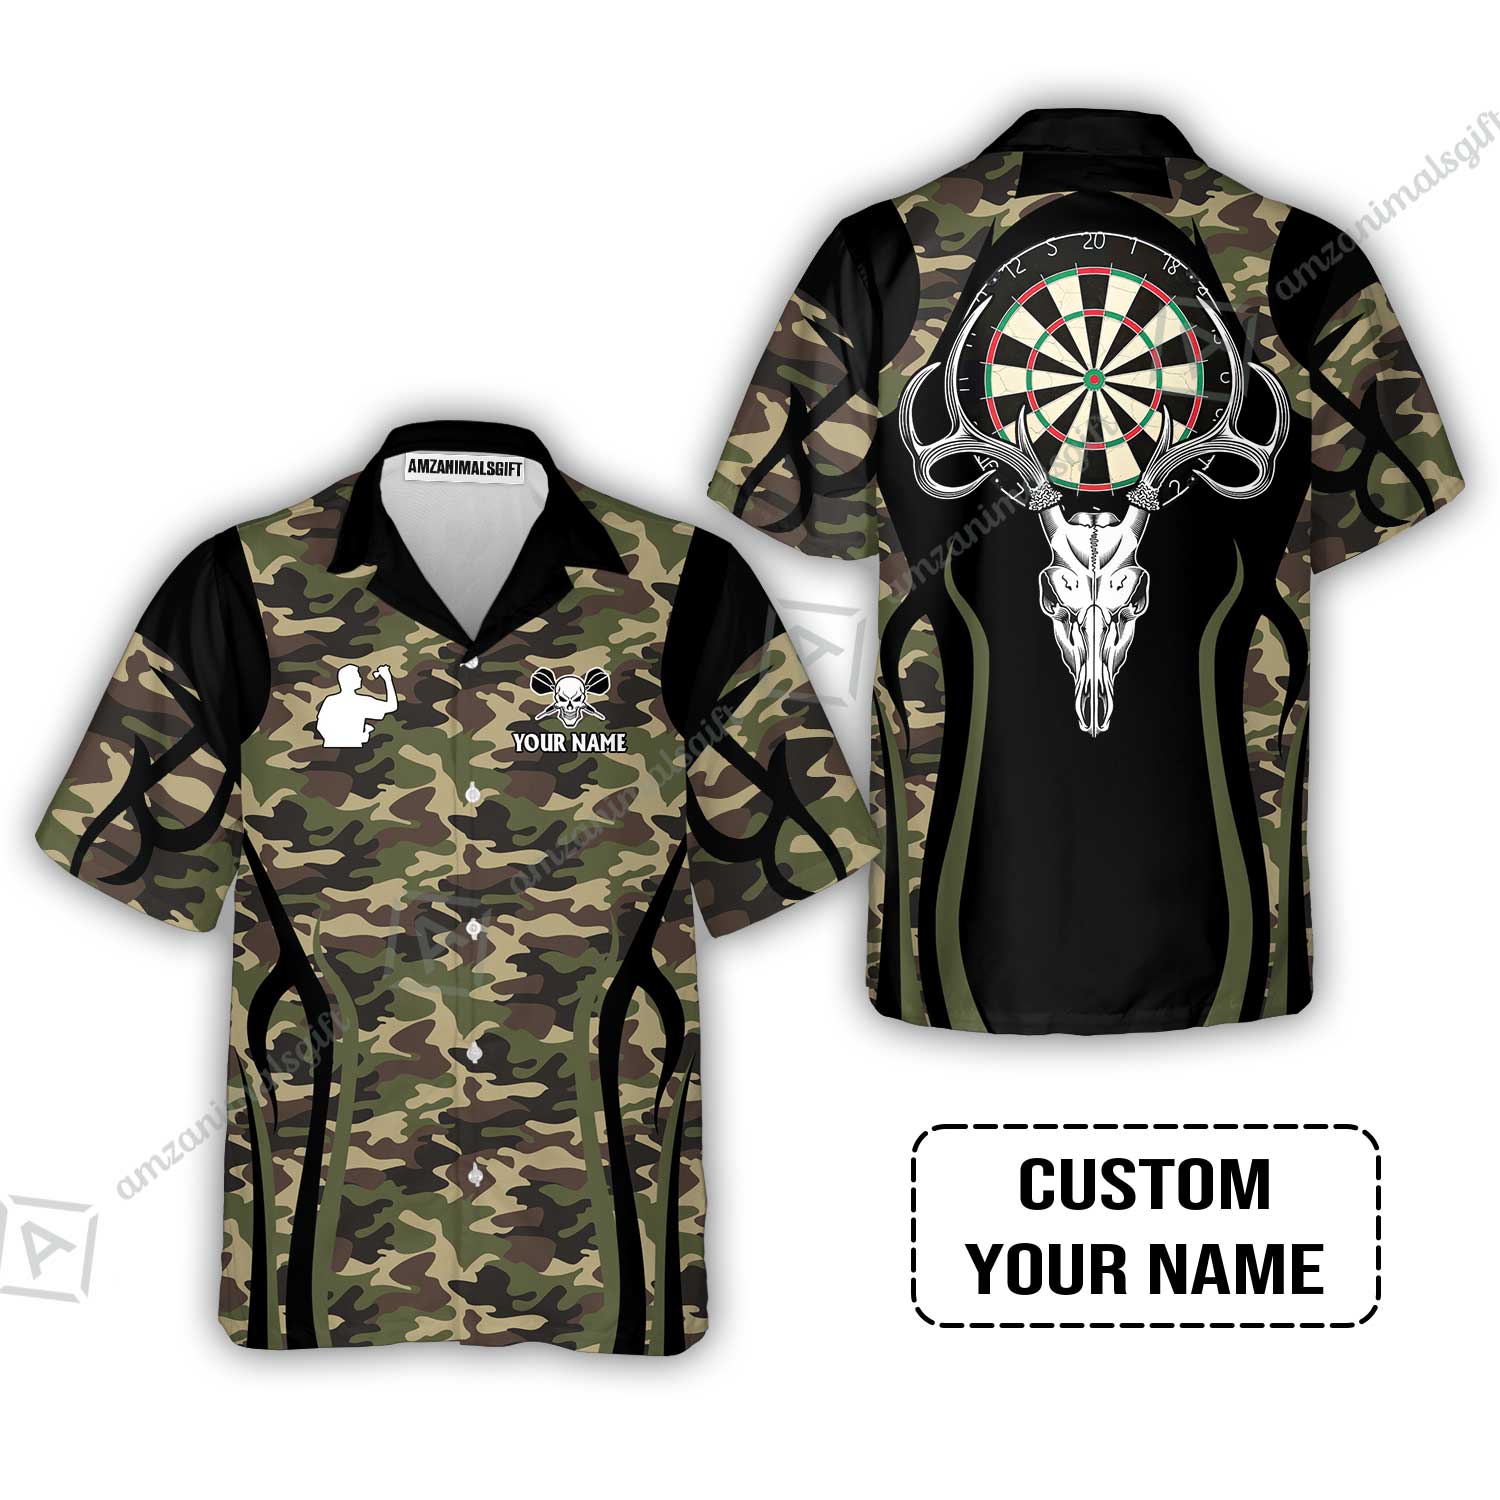 Customized Darts Hawaiian Shirt, Bull Skull Custom Darts, Personalized Name Hawaiian Shirt - Perfect Gift For Darts Lovers, Darts Players